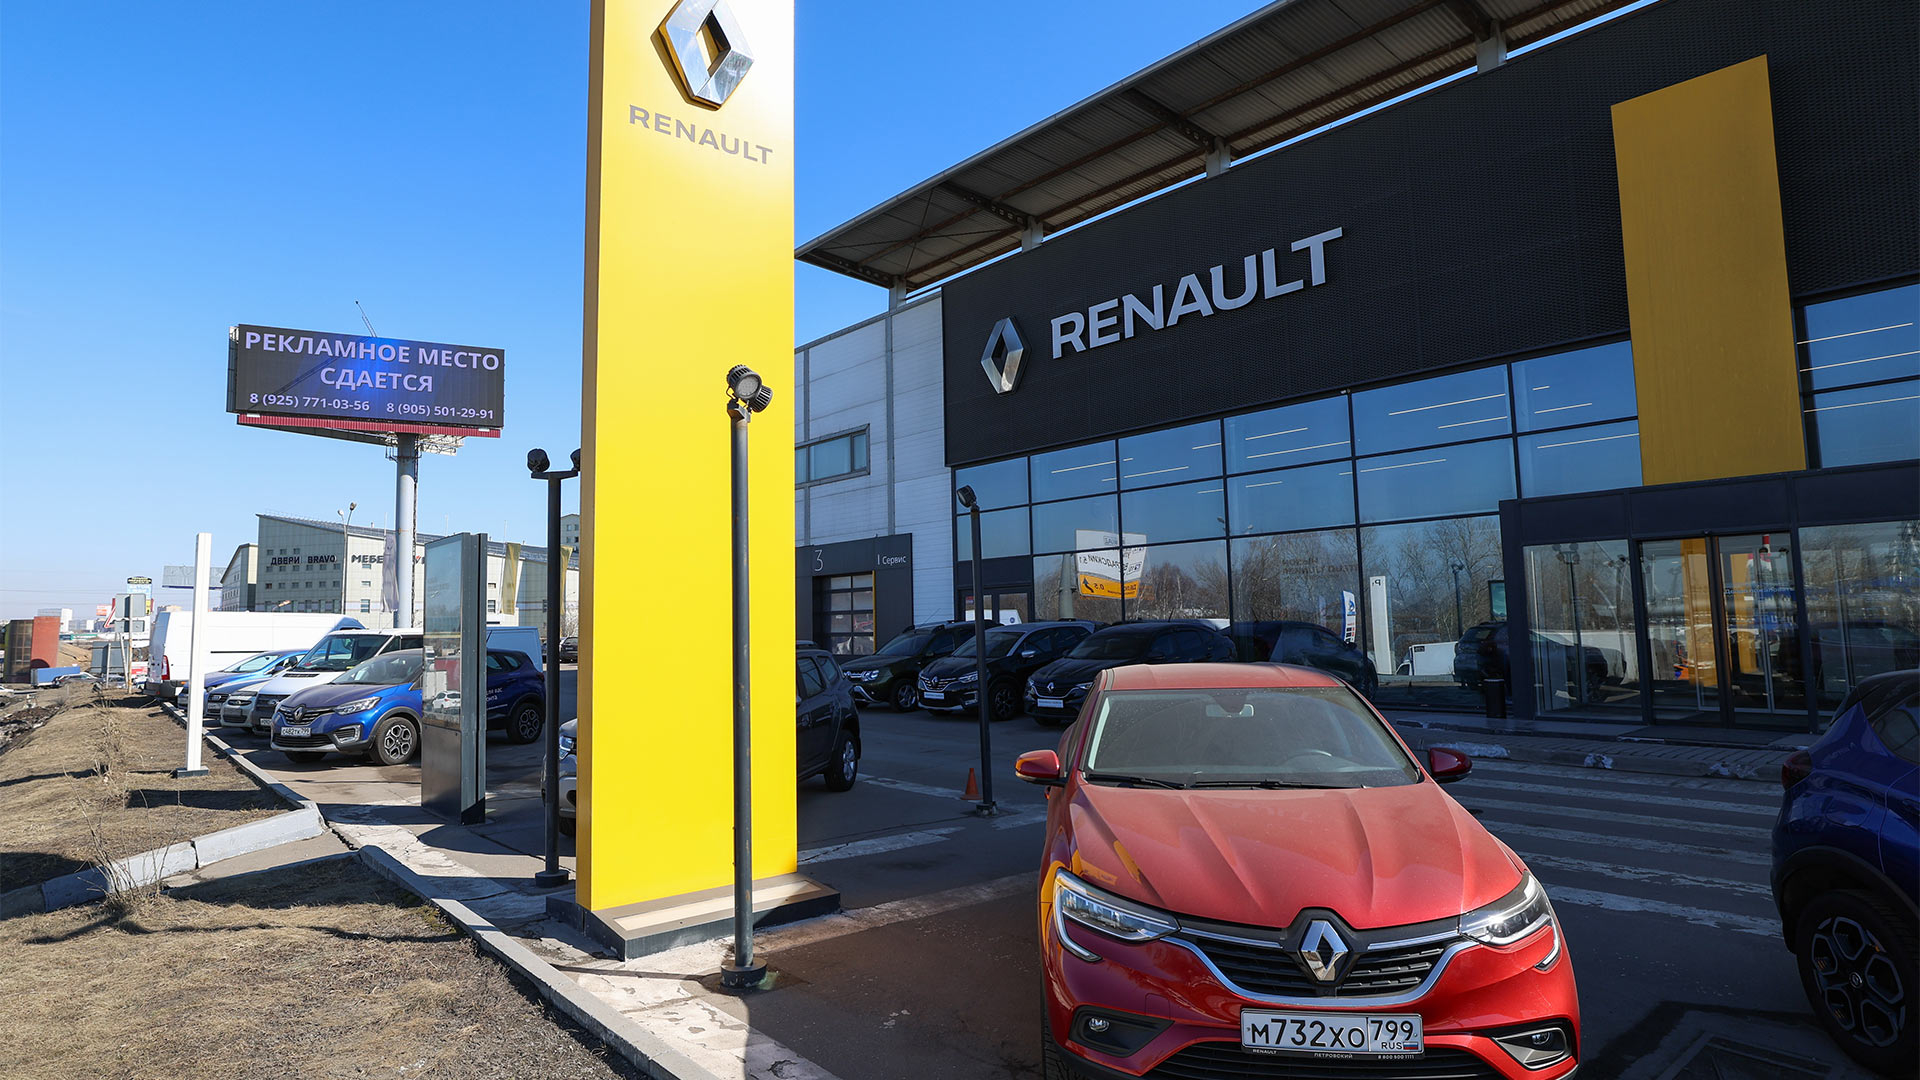 Renault-Händler in Petrovsky, Russland | picture alliance/dpa/TASS